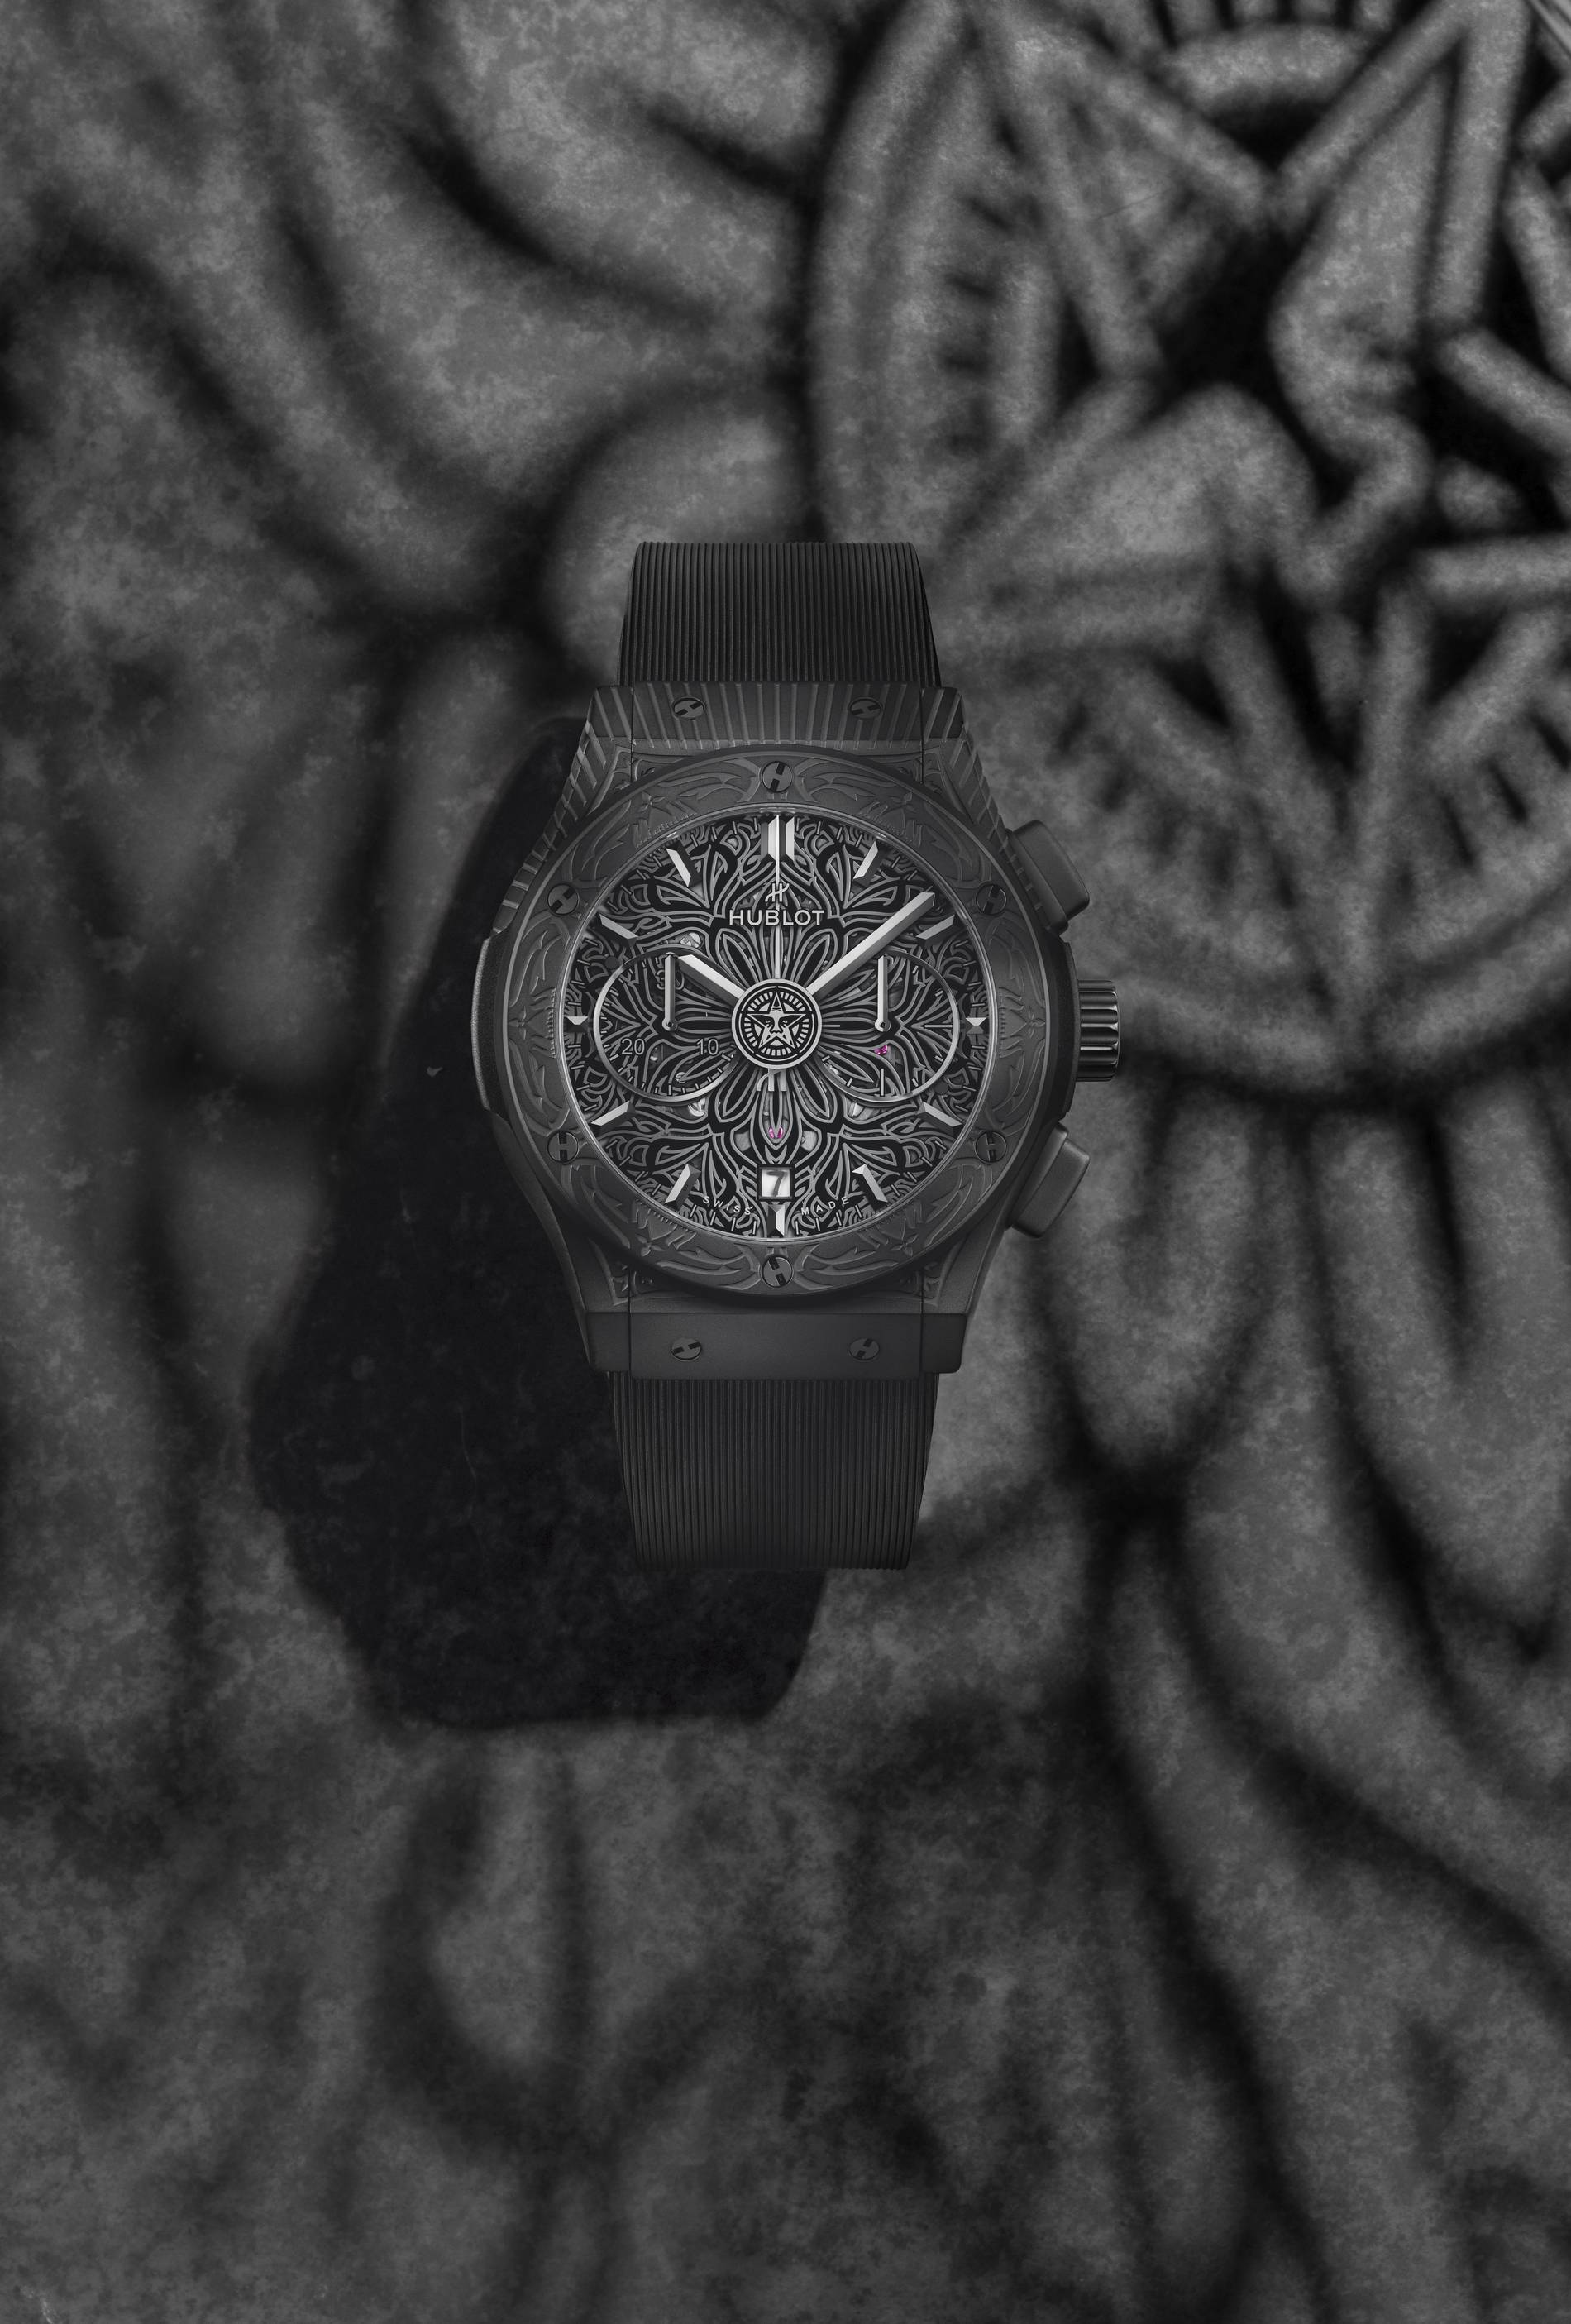 The Classic Fusion Aerofusion Chronograph All Black Shepard Fairey timepiece